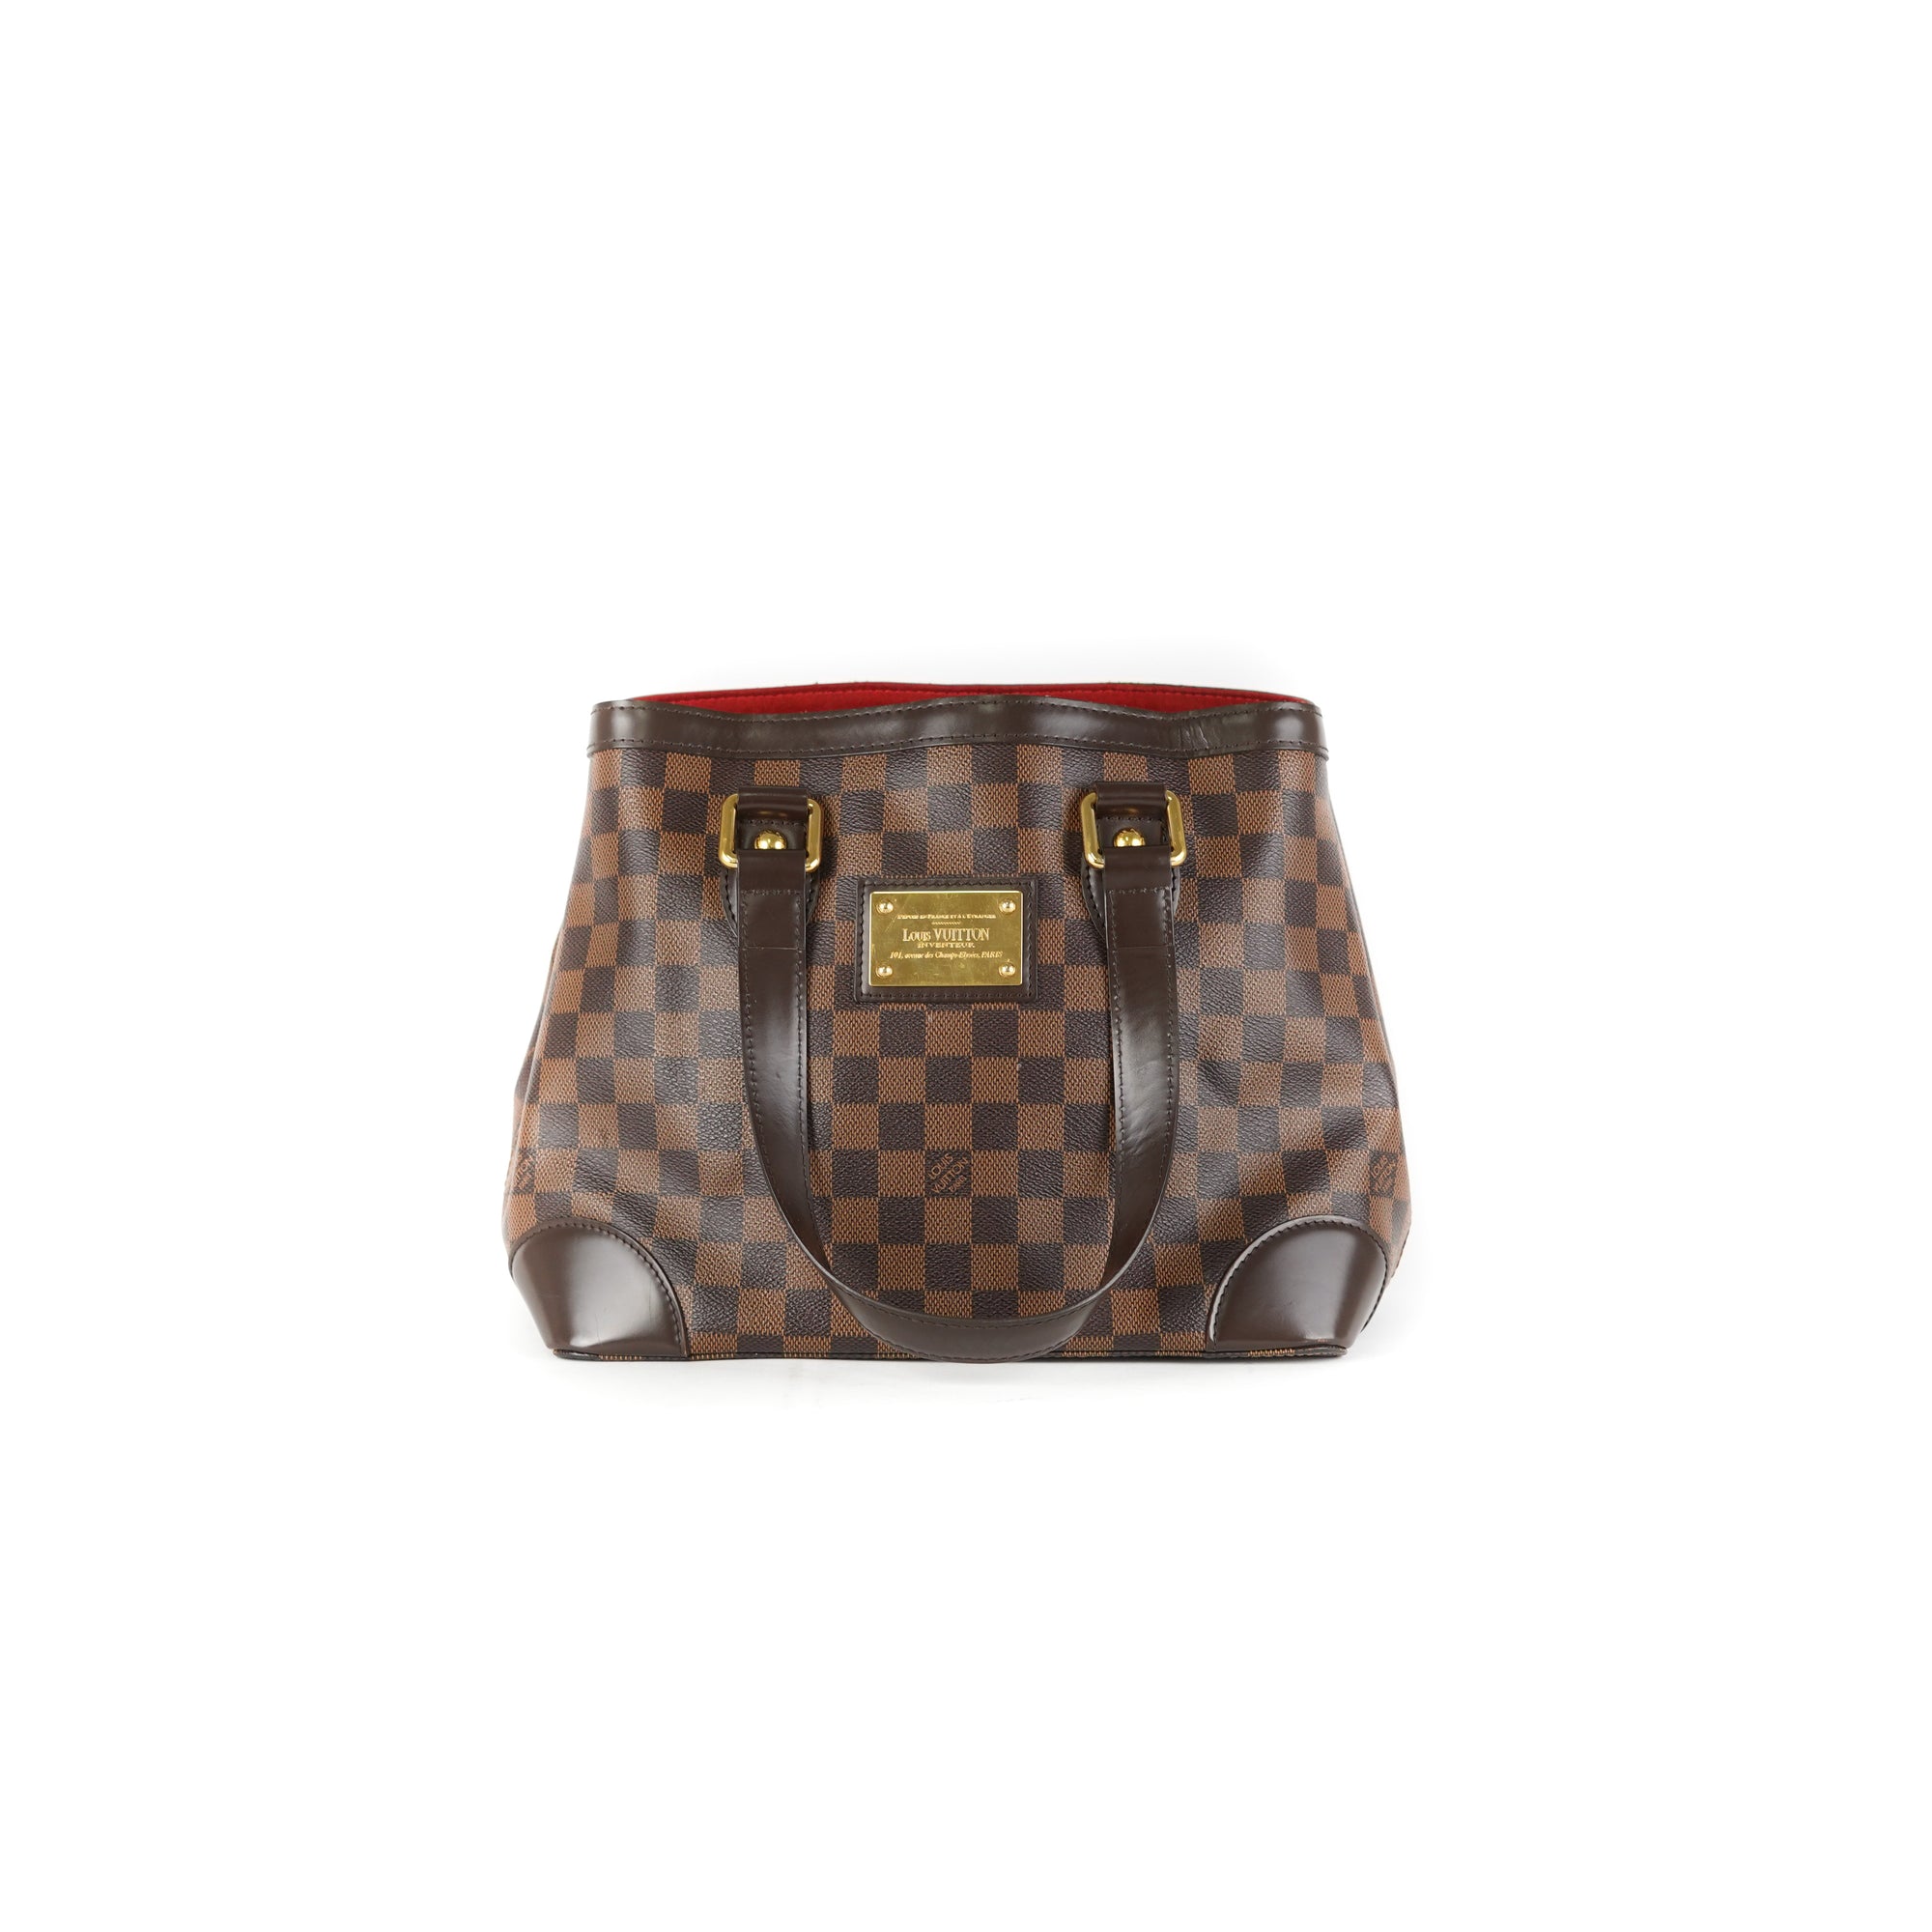 Louis Vuitton Neverfull PM Damier Ebene Shoulder Bag - THE PURSE AFFAIR